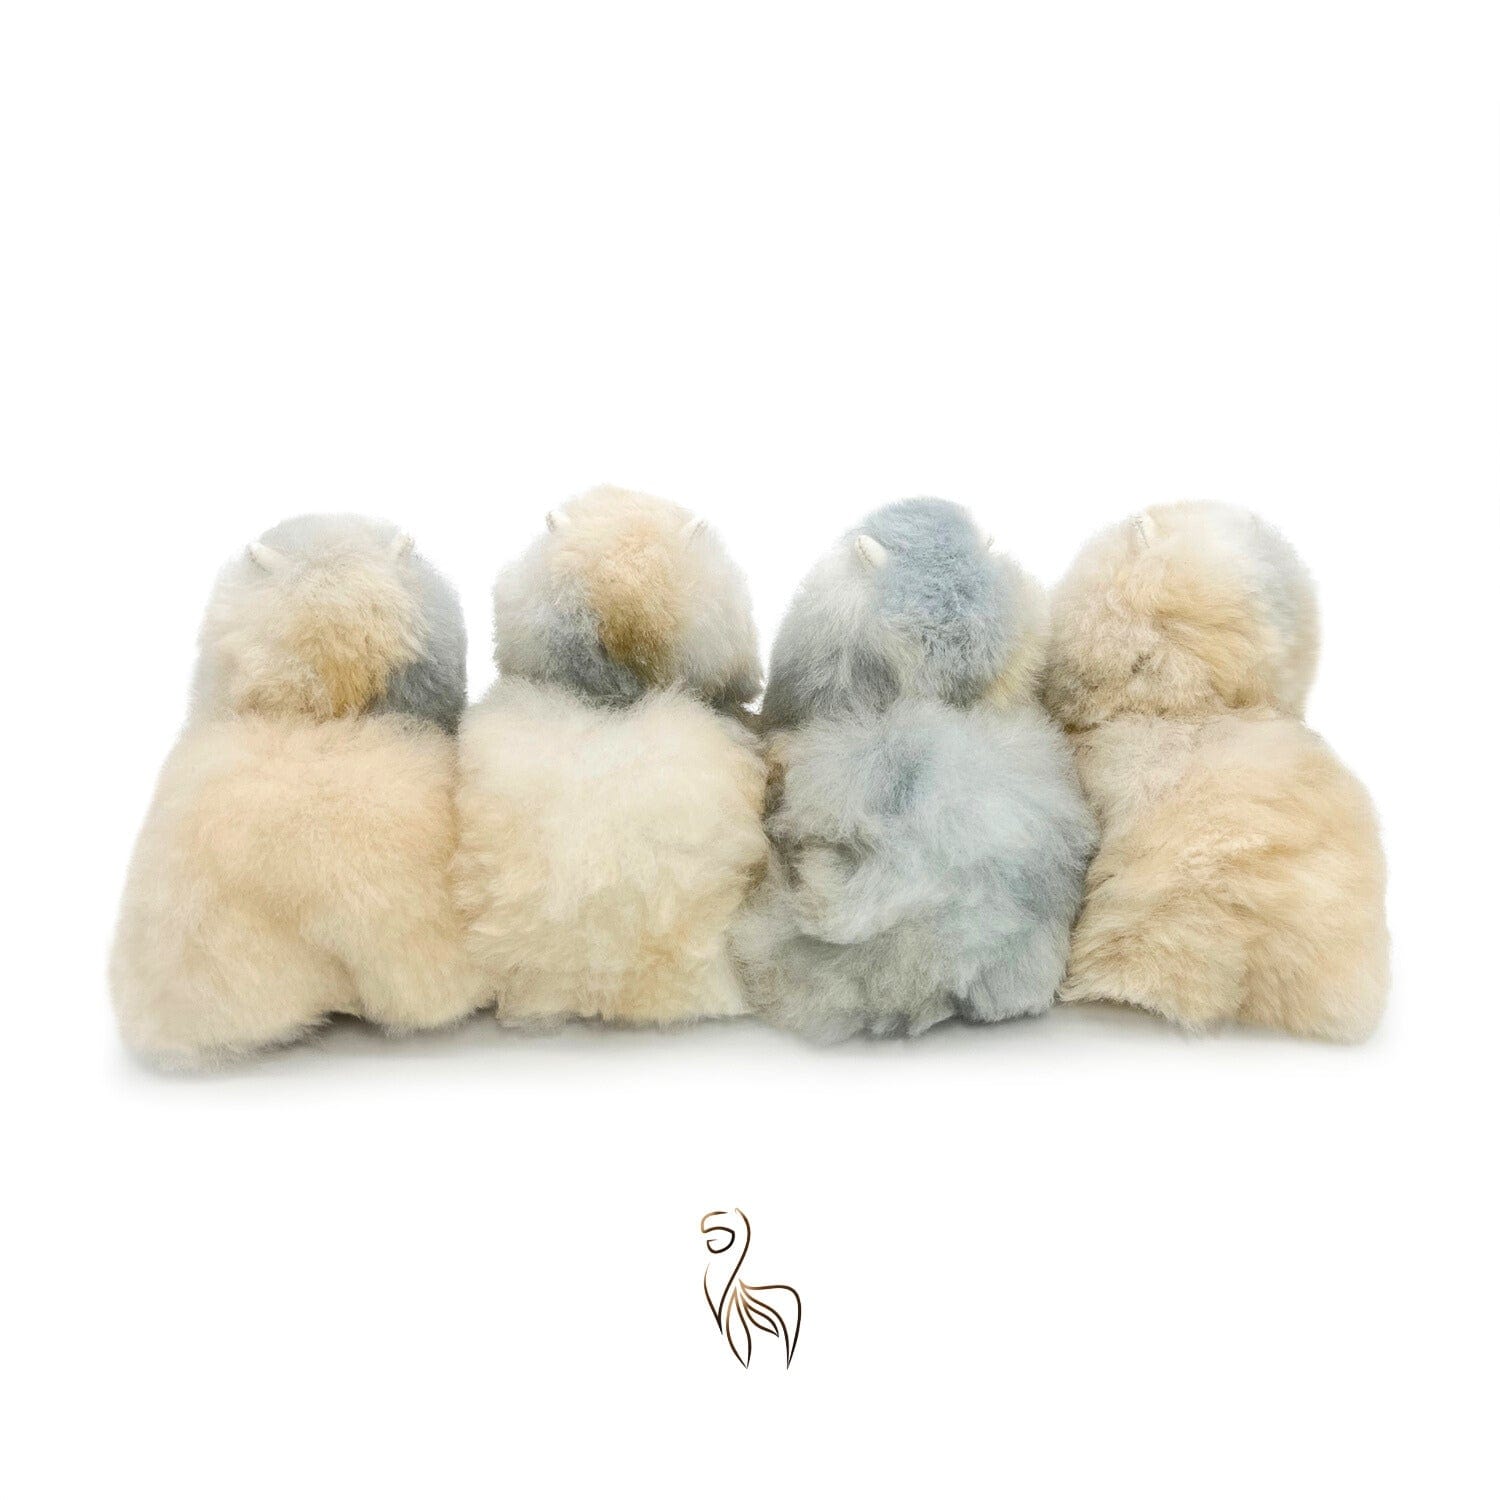 Seashell - Mini Alpaca Toy (15cm) - Limited Edition